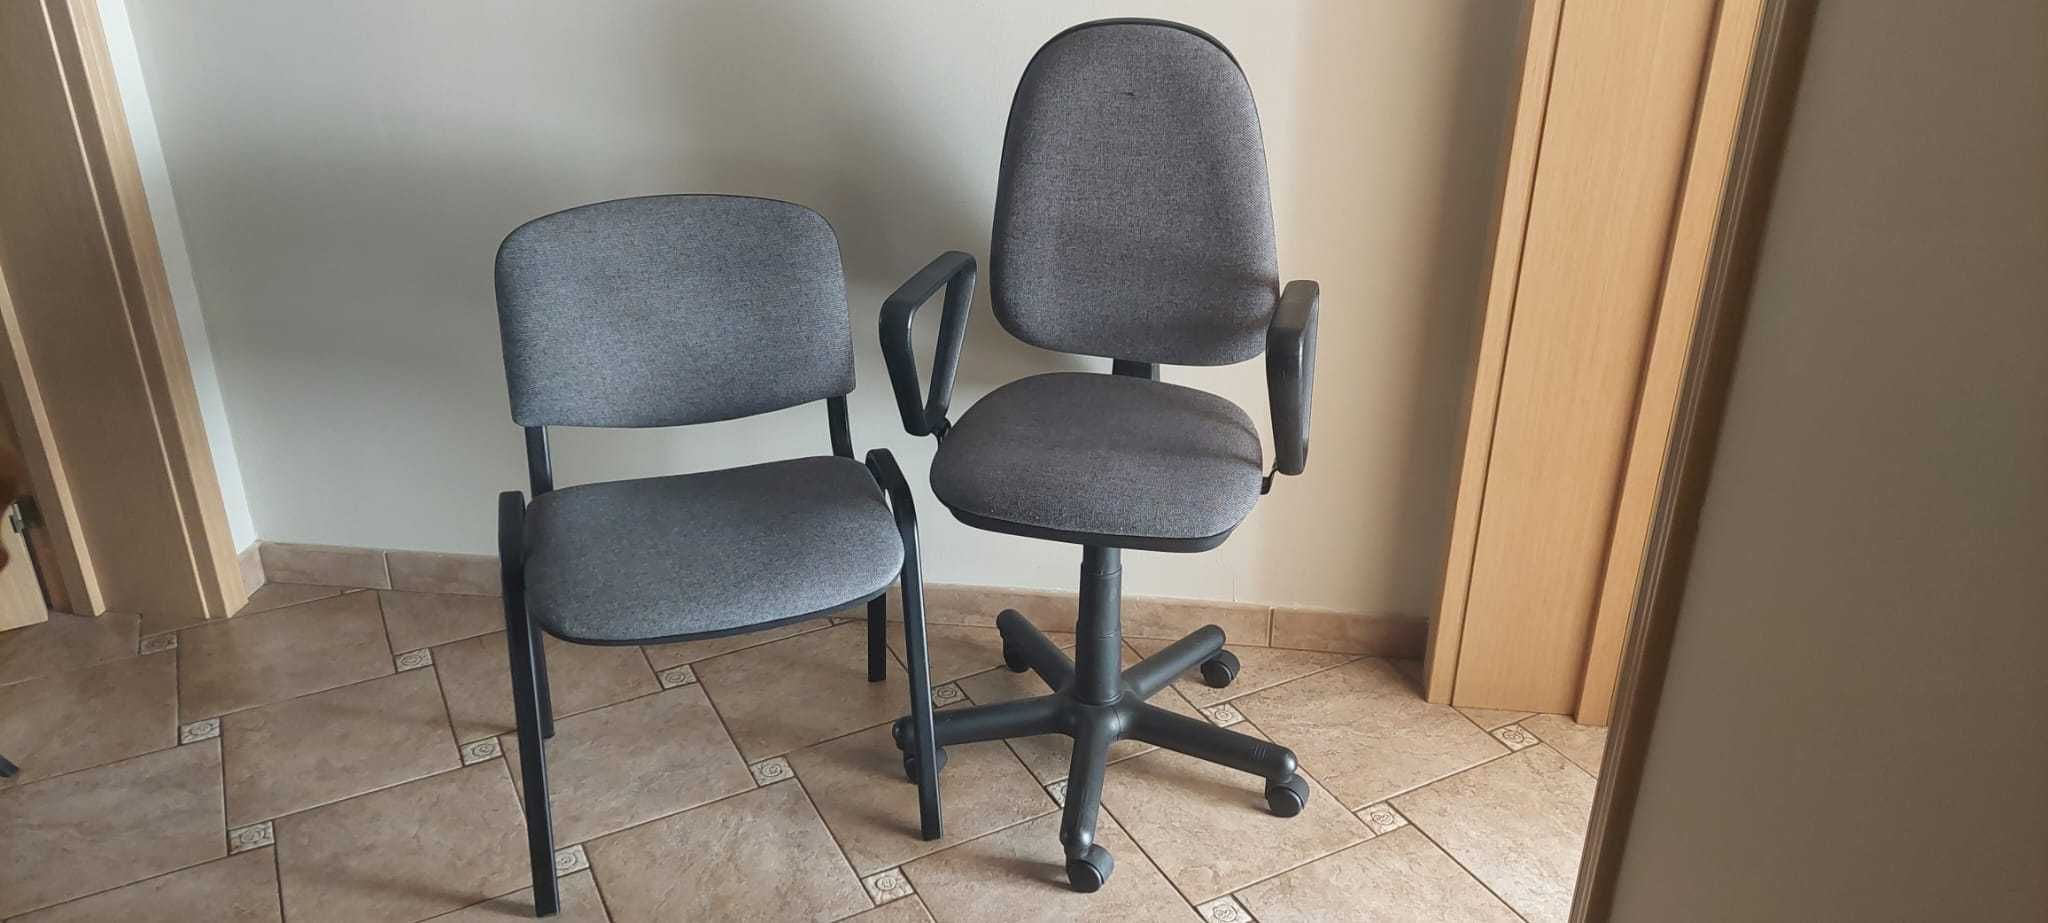 Fotel - krzesło obrotowe do komputera/biurka